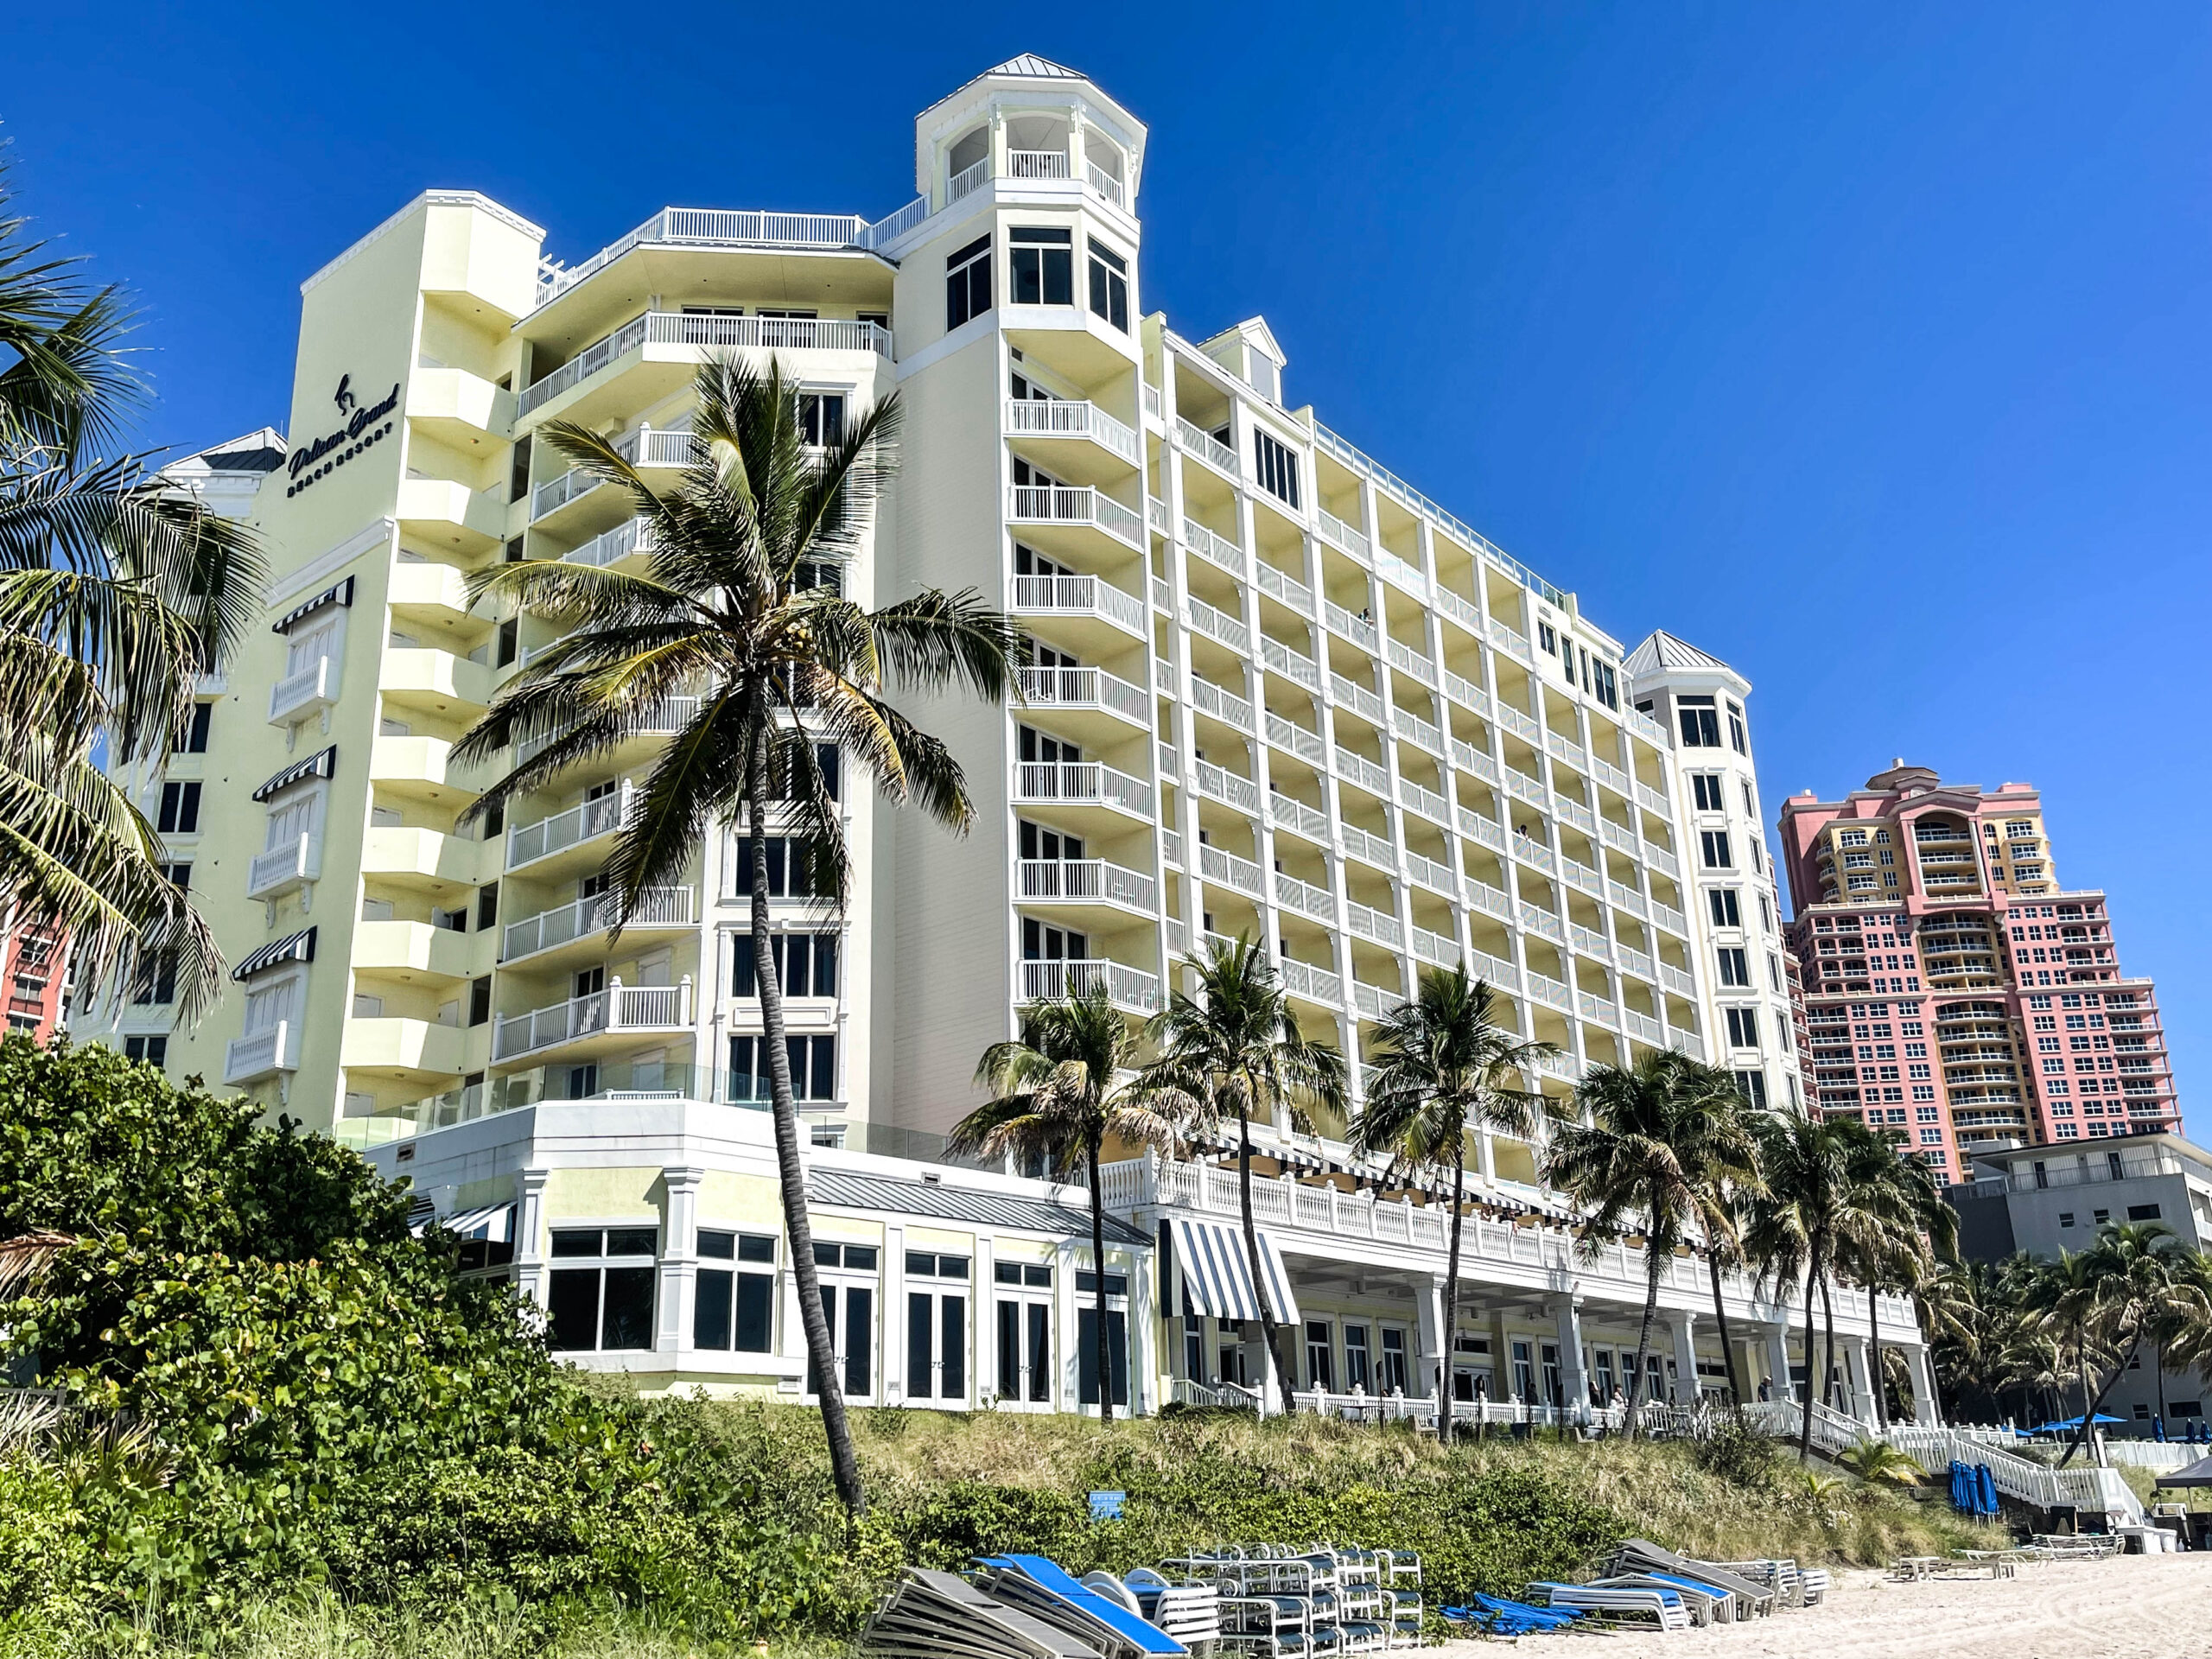 annika lee recommends Fort Lauderdale Beach Resort Porn Actress On Resort